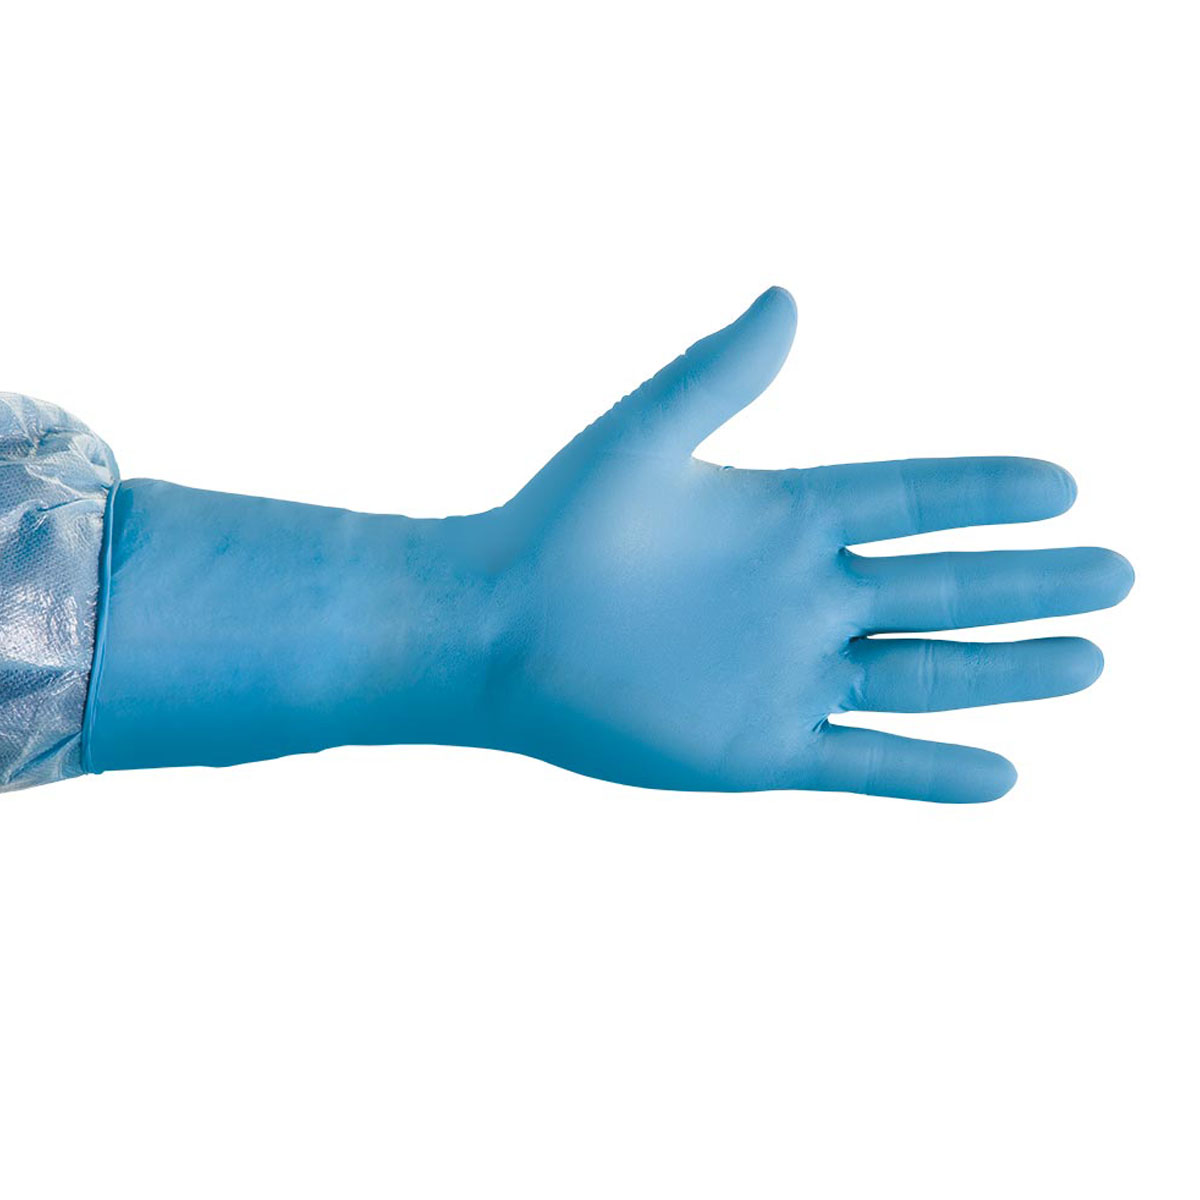 sterile nitrile surgical gloves